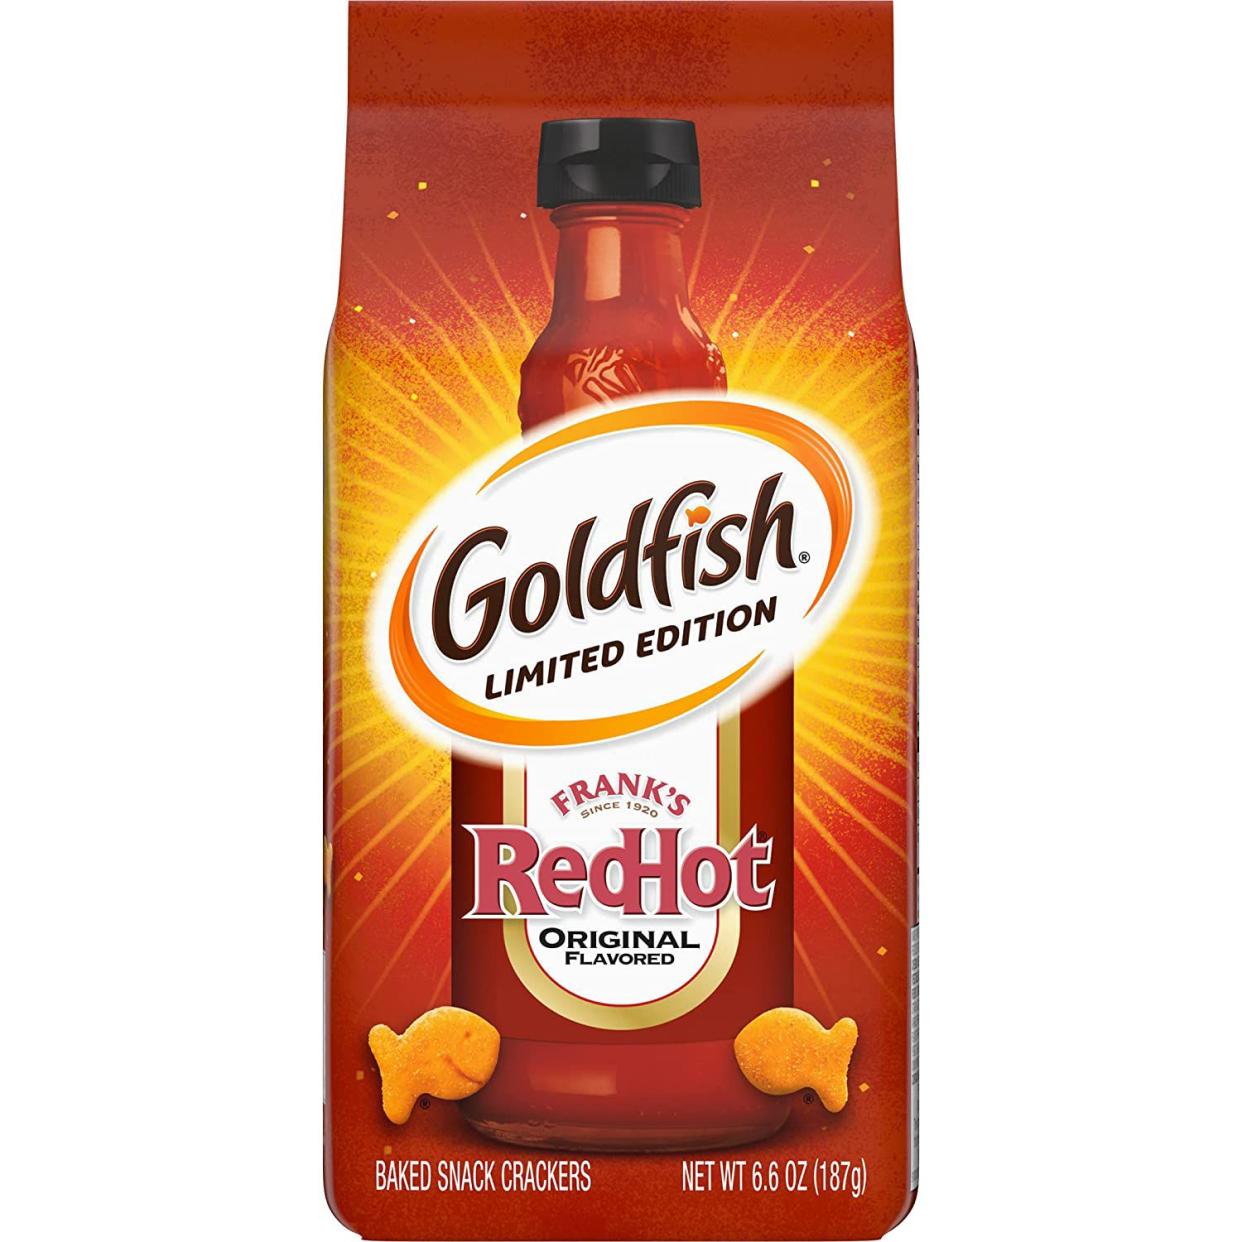 Frank’s RedHot Goldfish